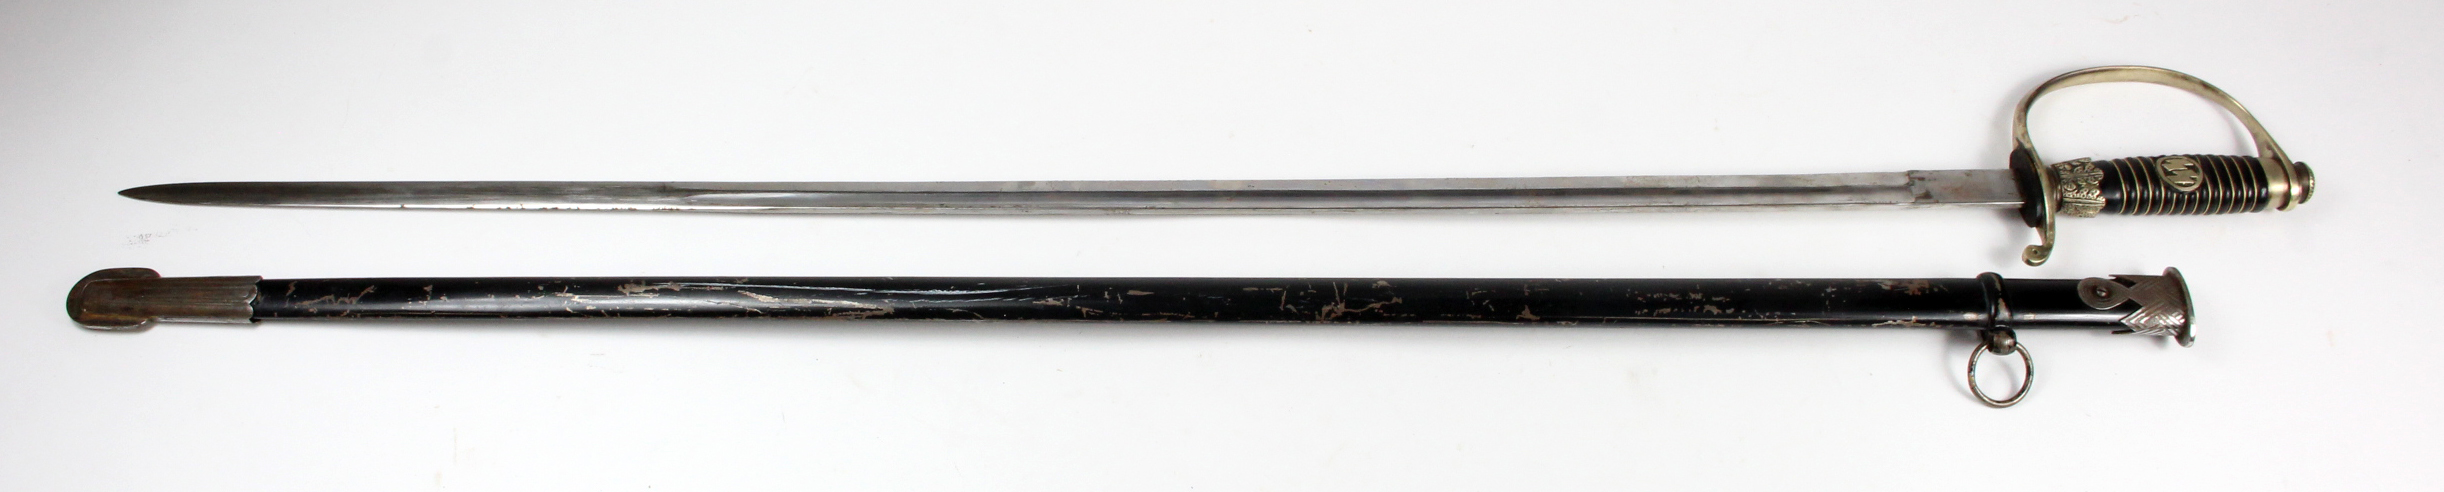 German SS sword clean unmarked blade, scabbard finish worn